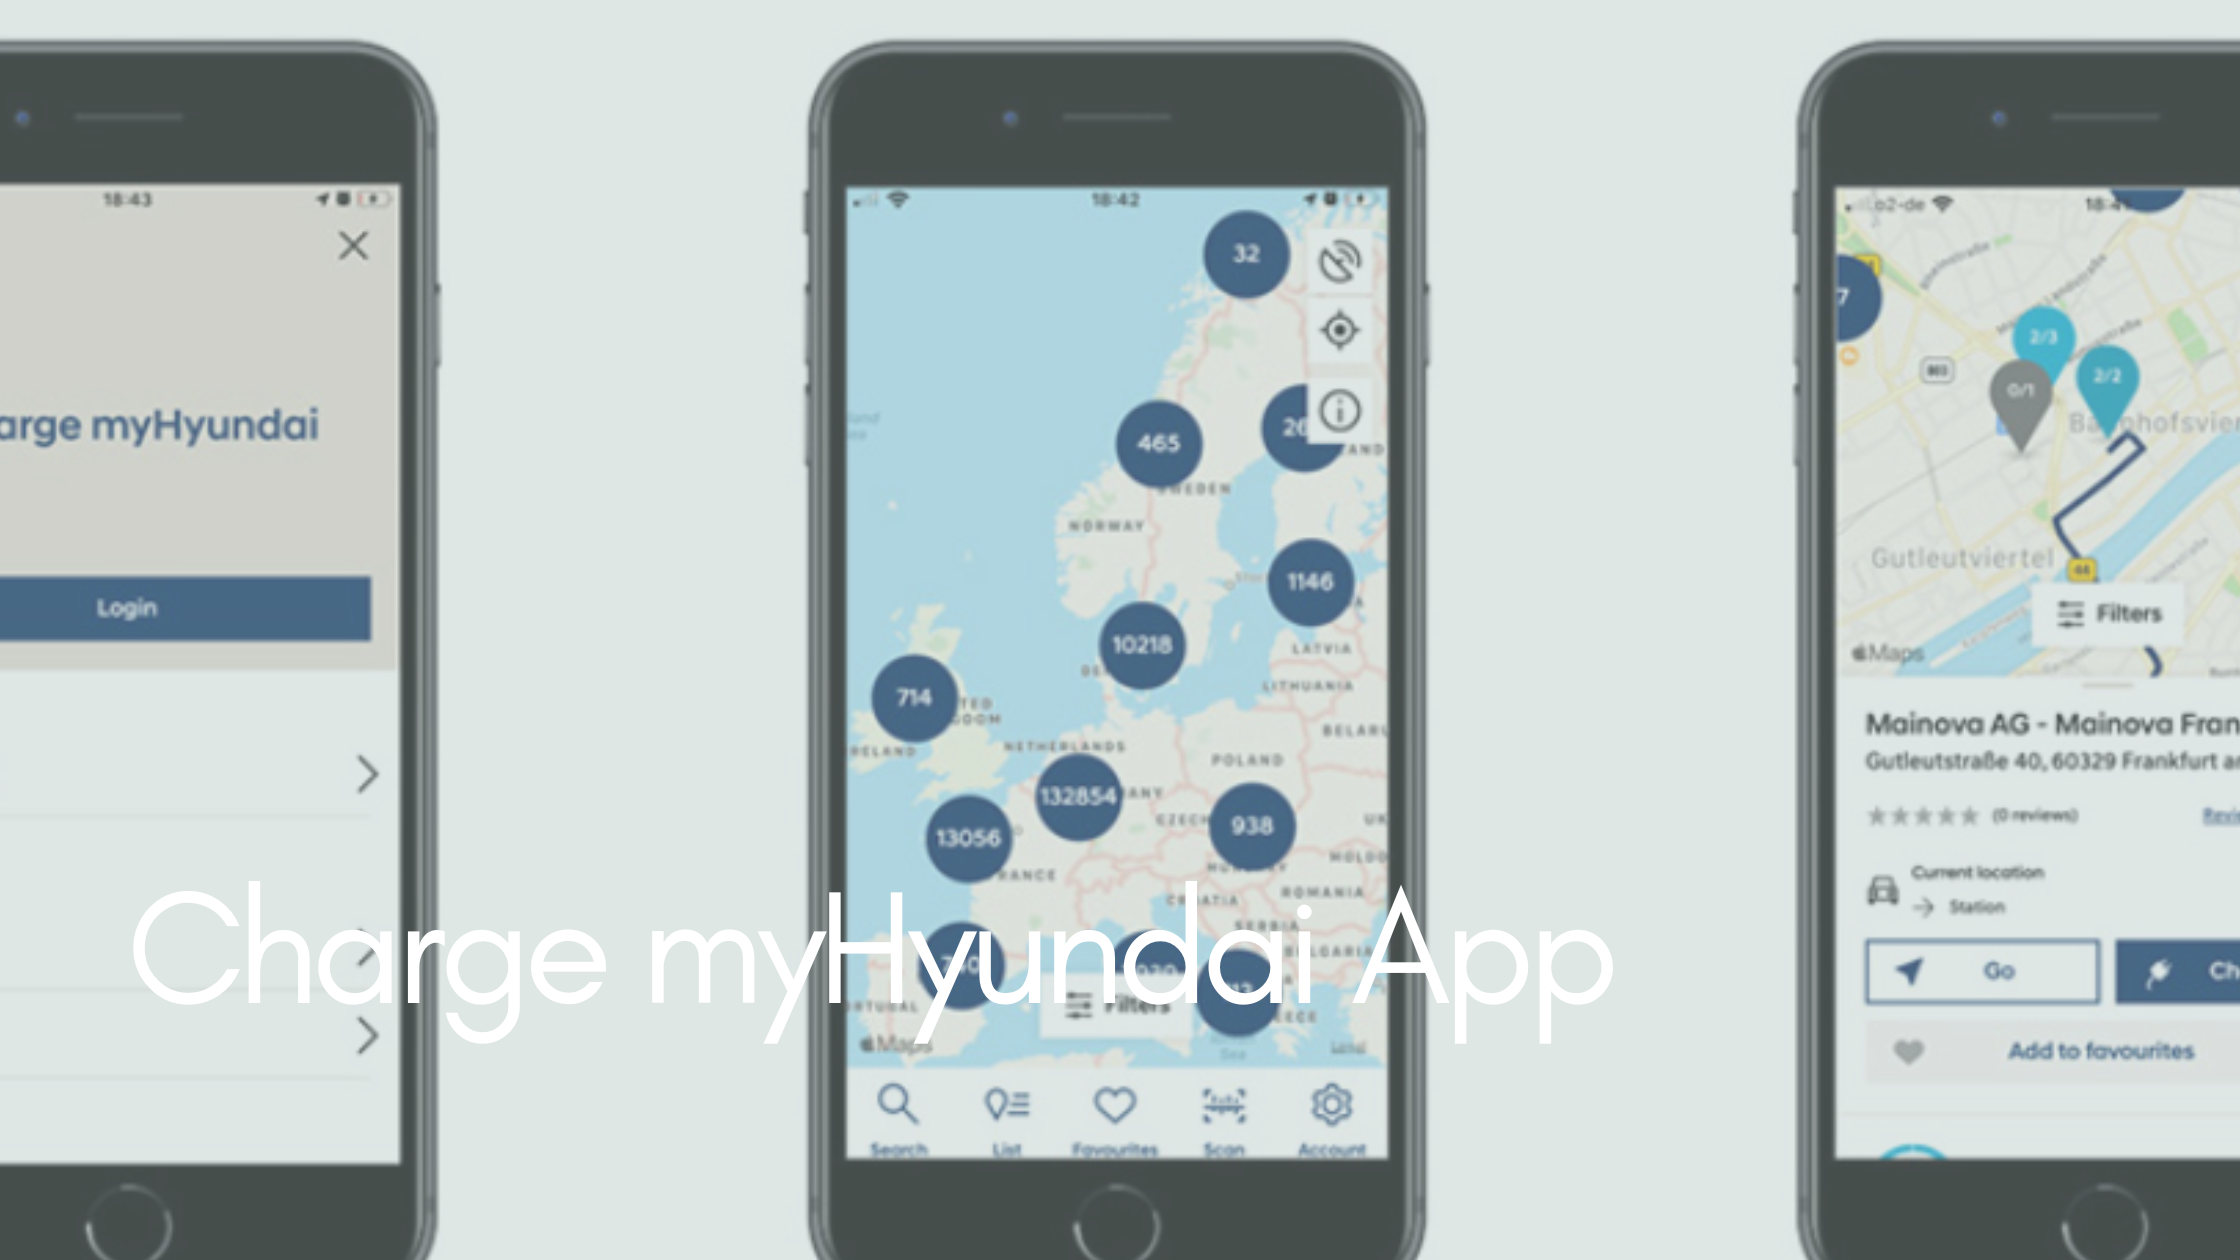 Charge myHyundai App